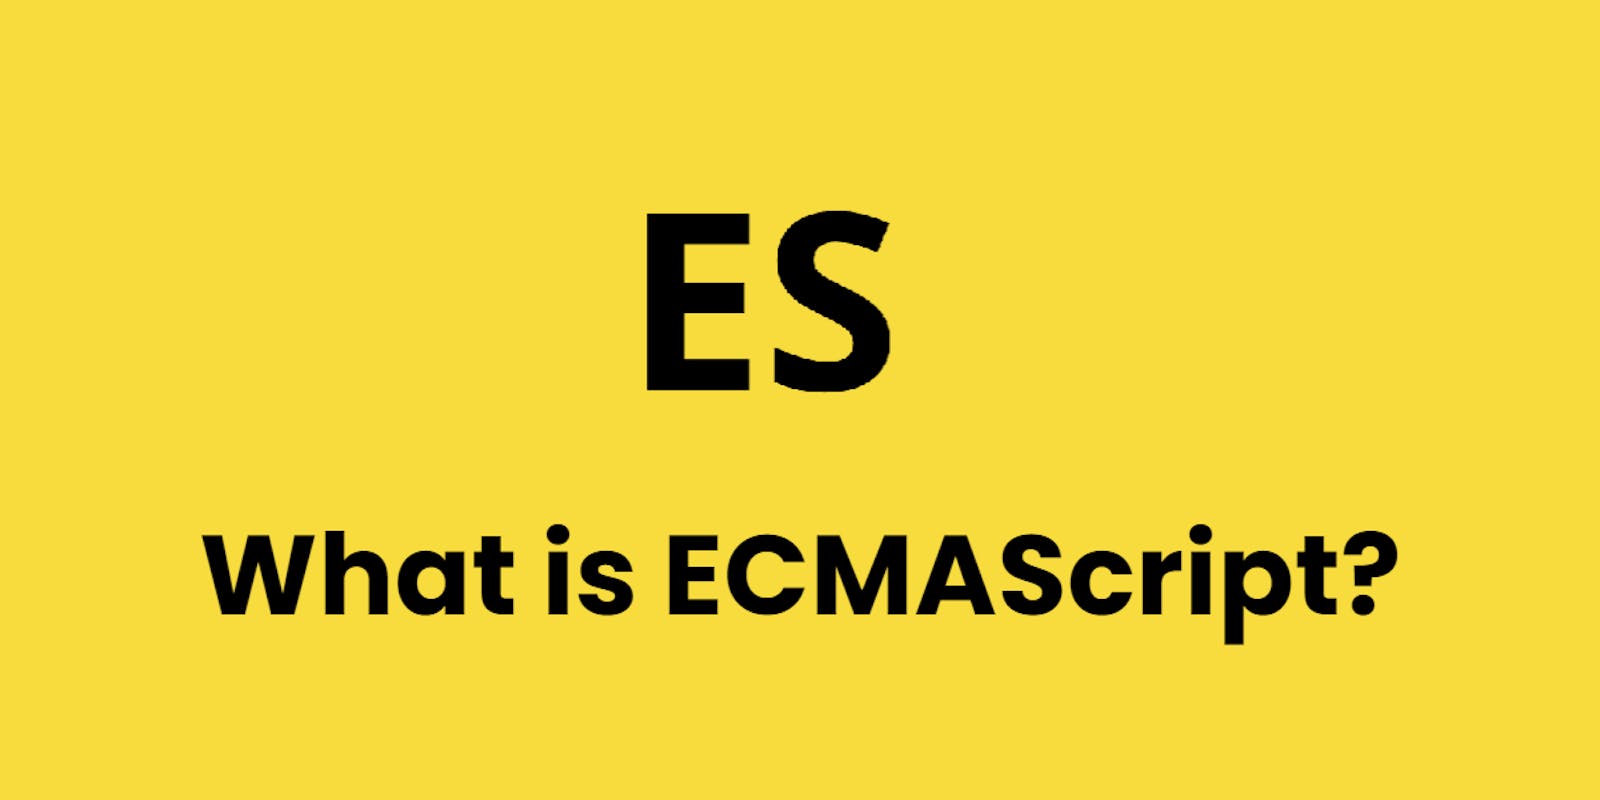 It’s not only what you know: Ecma script